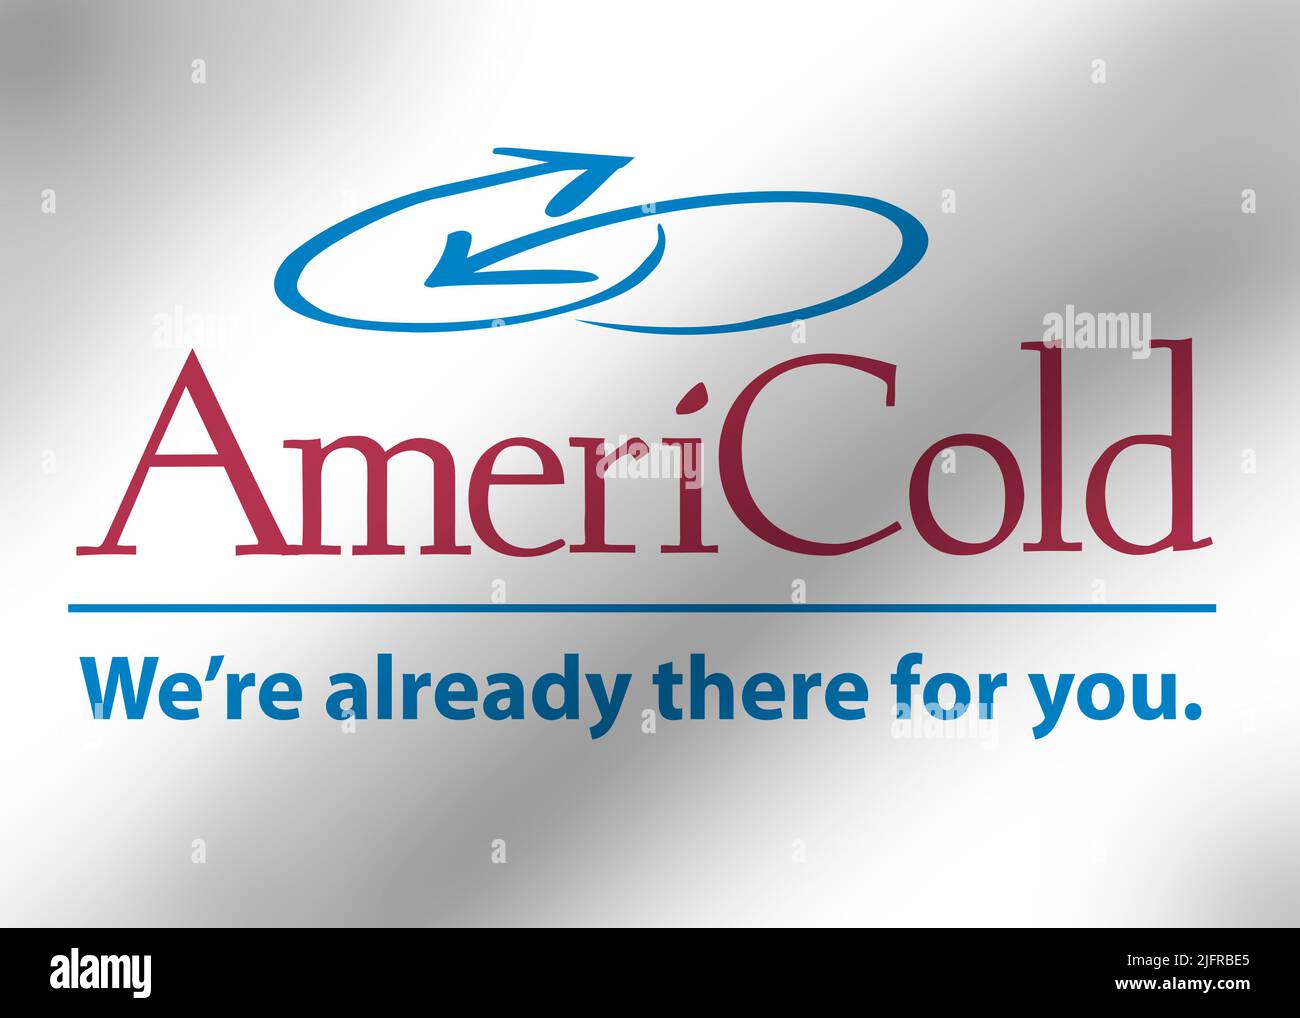 Ameri Cold logo Stock Photo